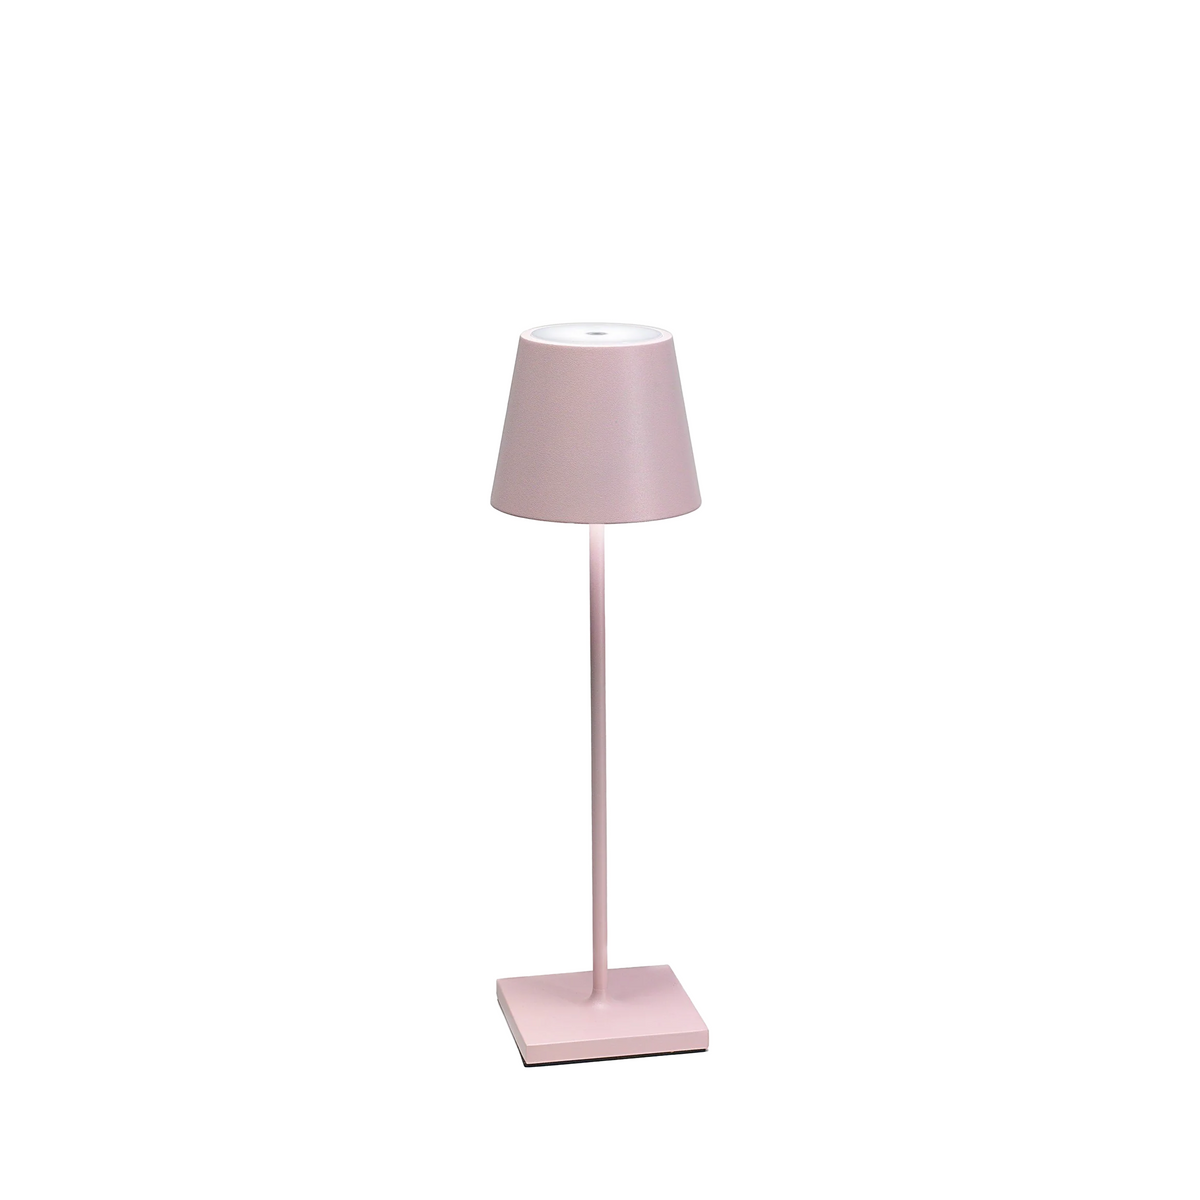 Poldina Pro Lamp in Pink